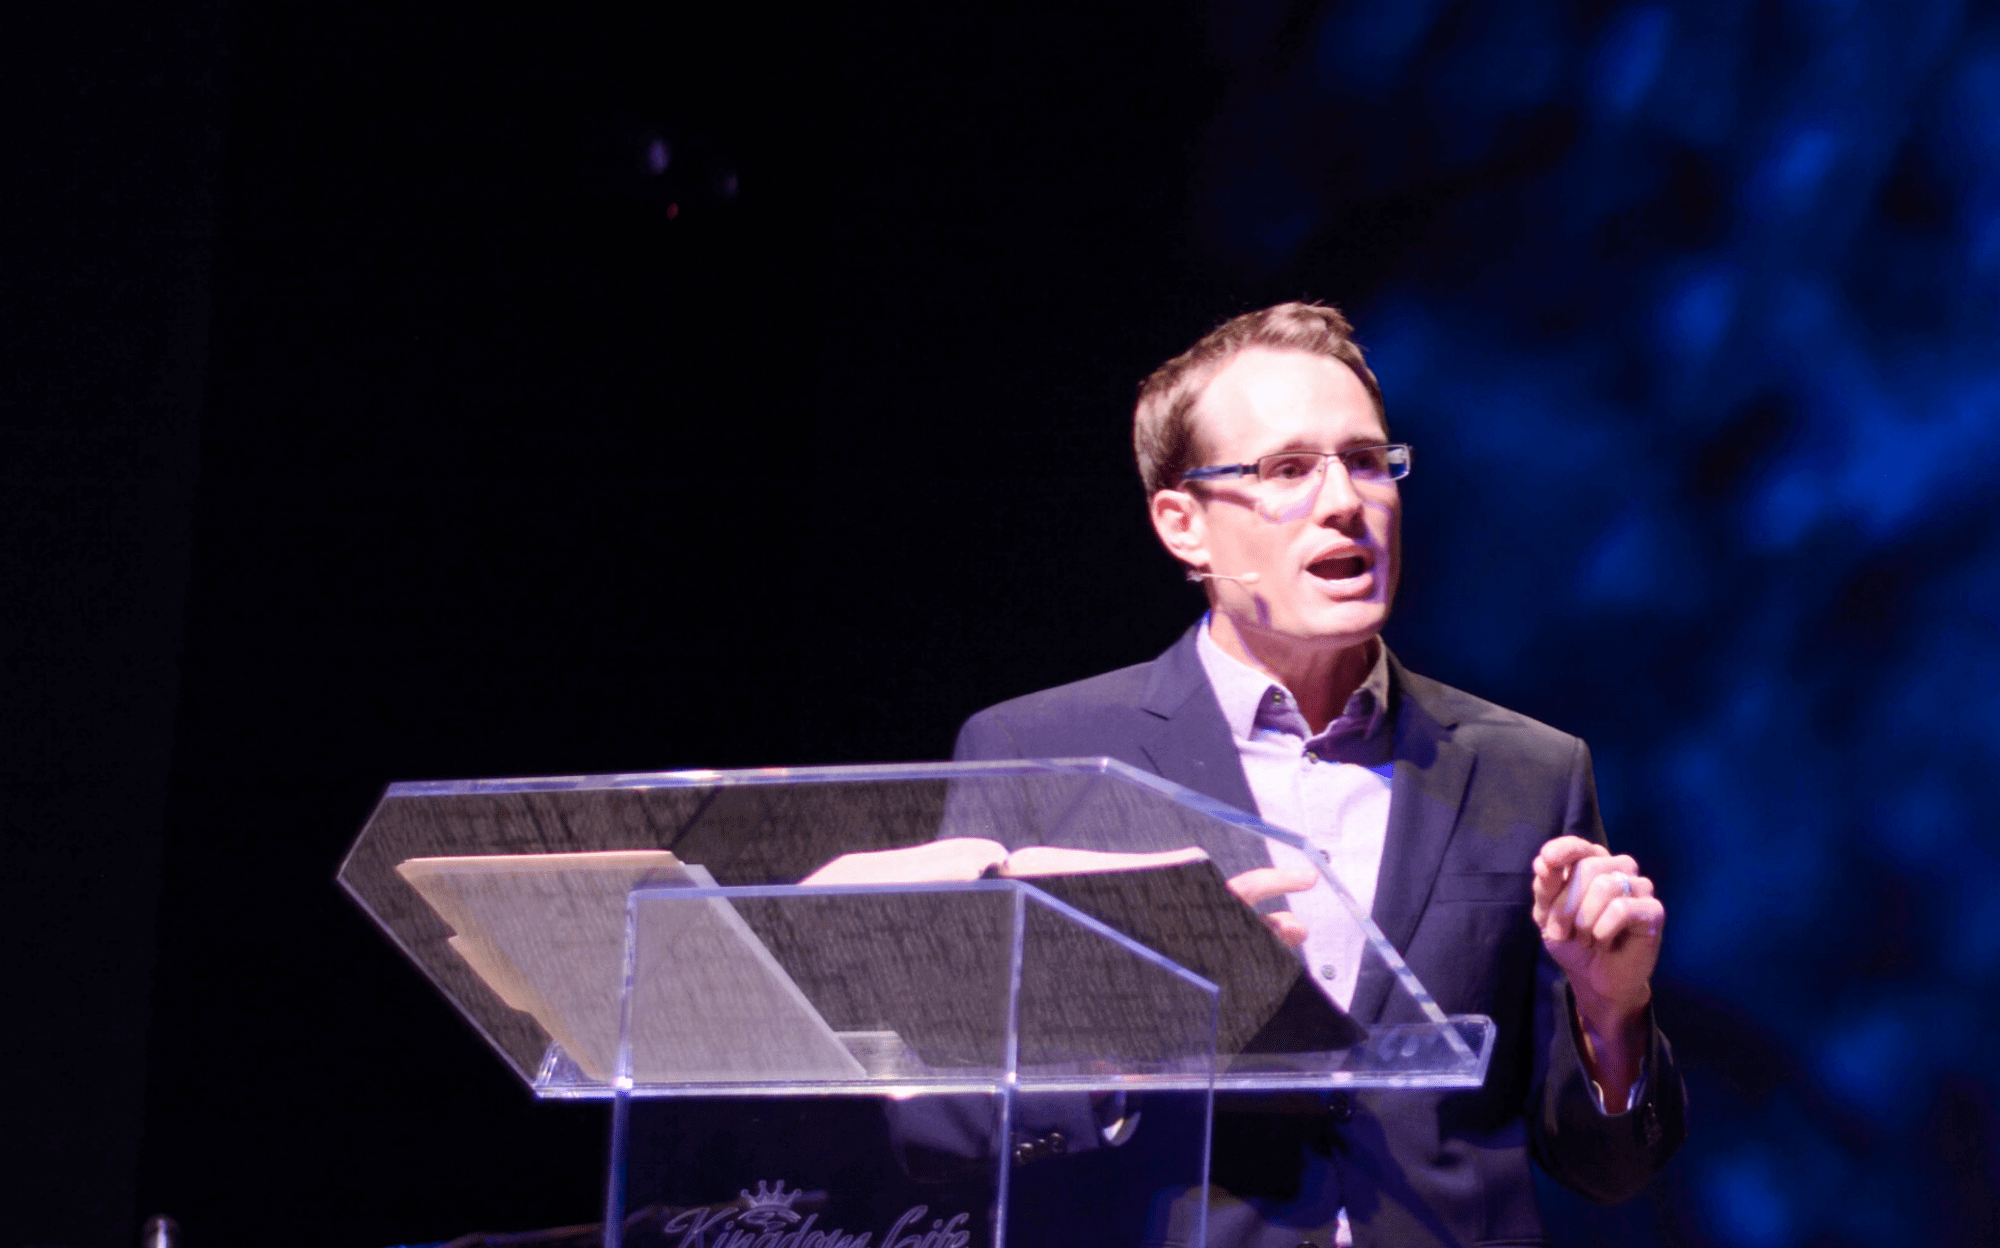 Preaching at KingdomLife Church in Frisco, Texas.